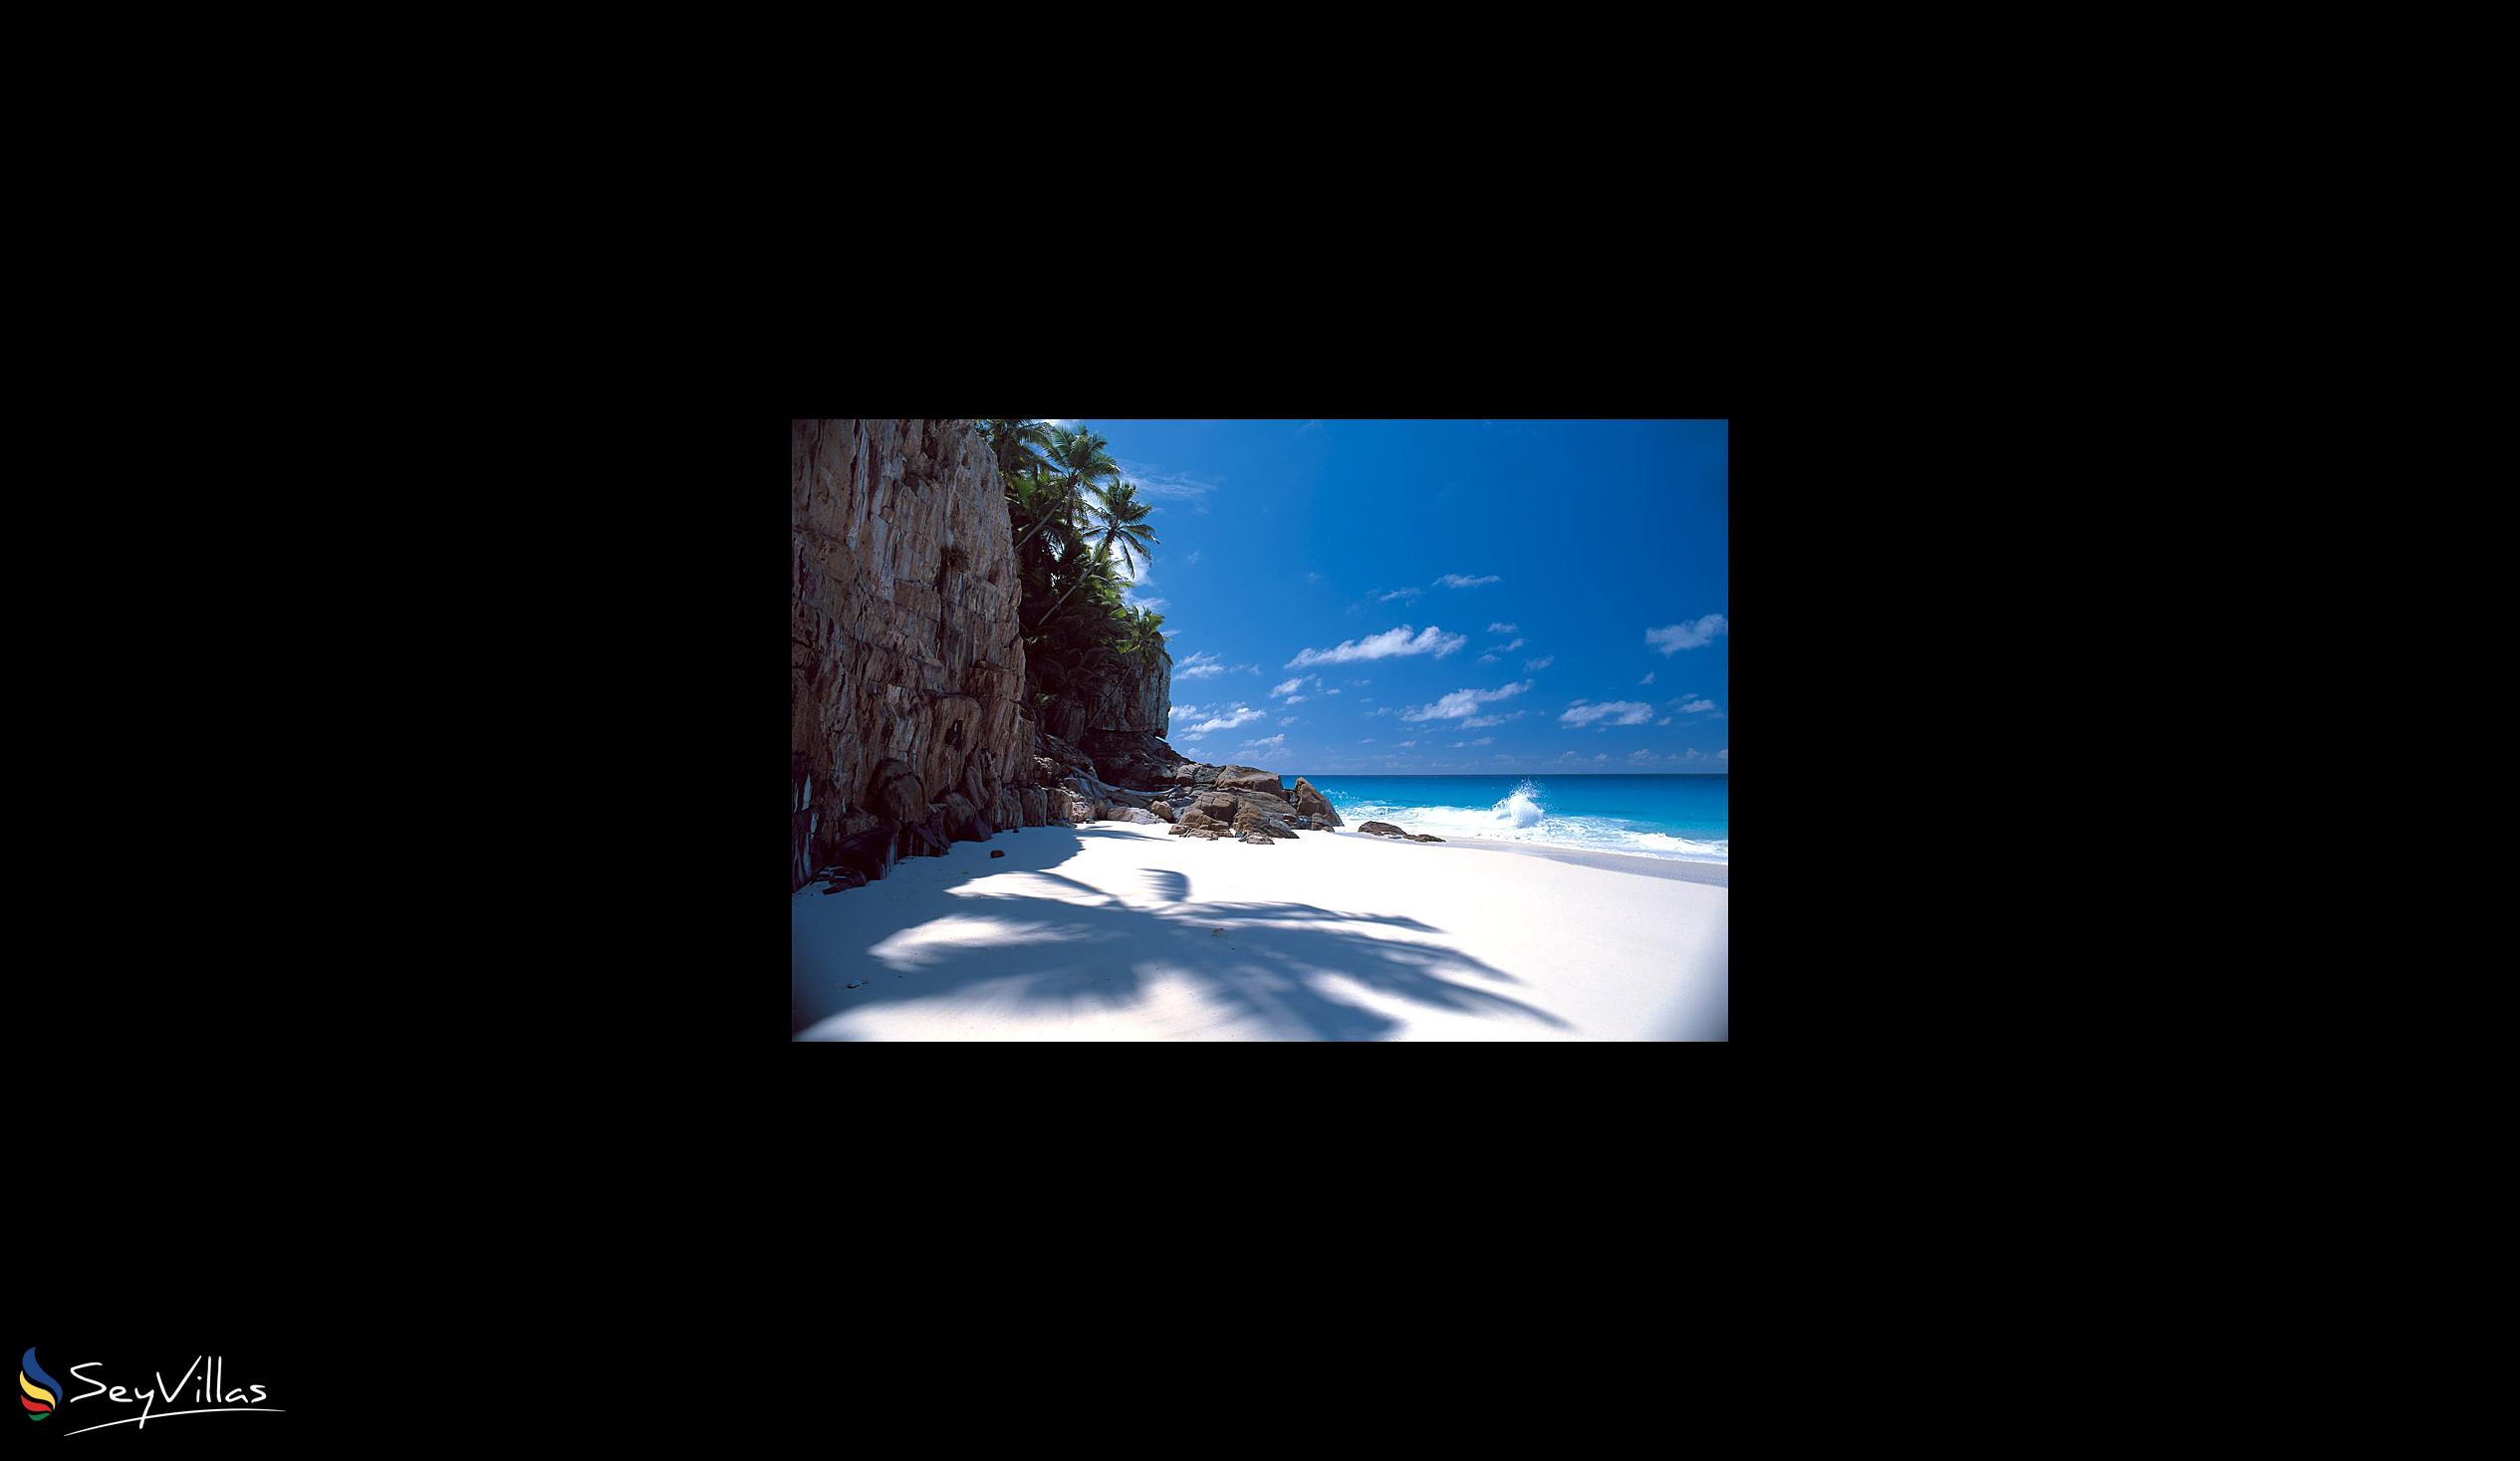 Photo 1: Anse Maquereau - Frégate - Other islands (Seychelles)